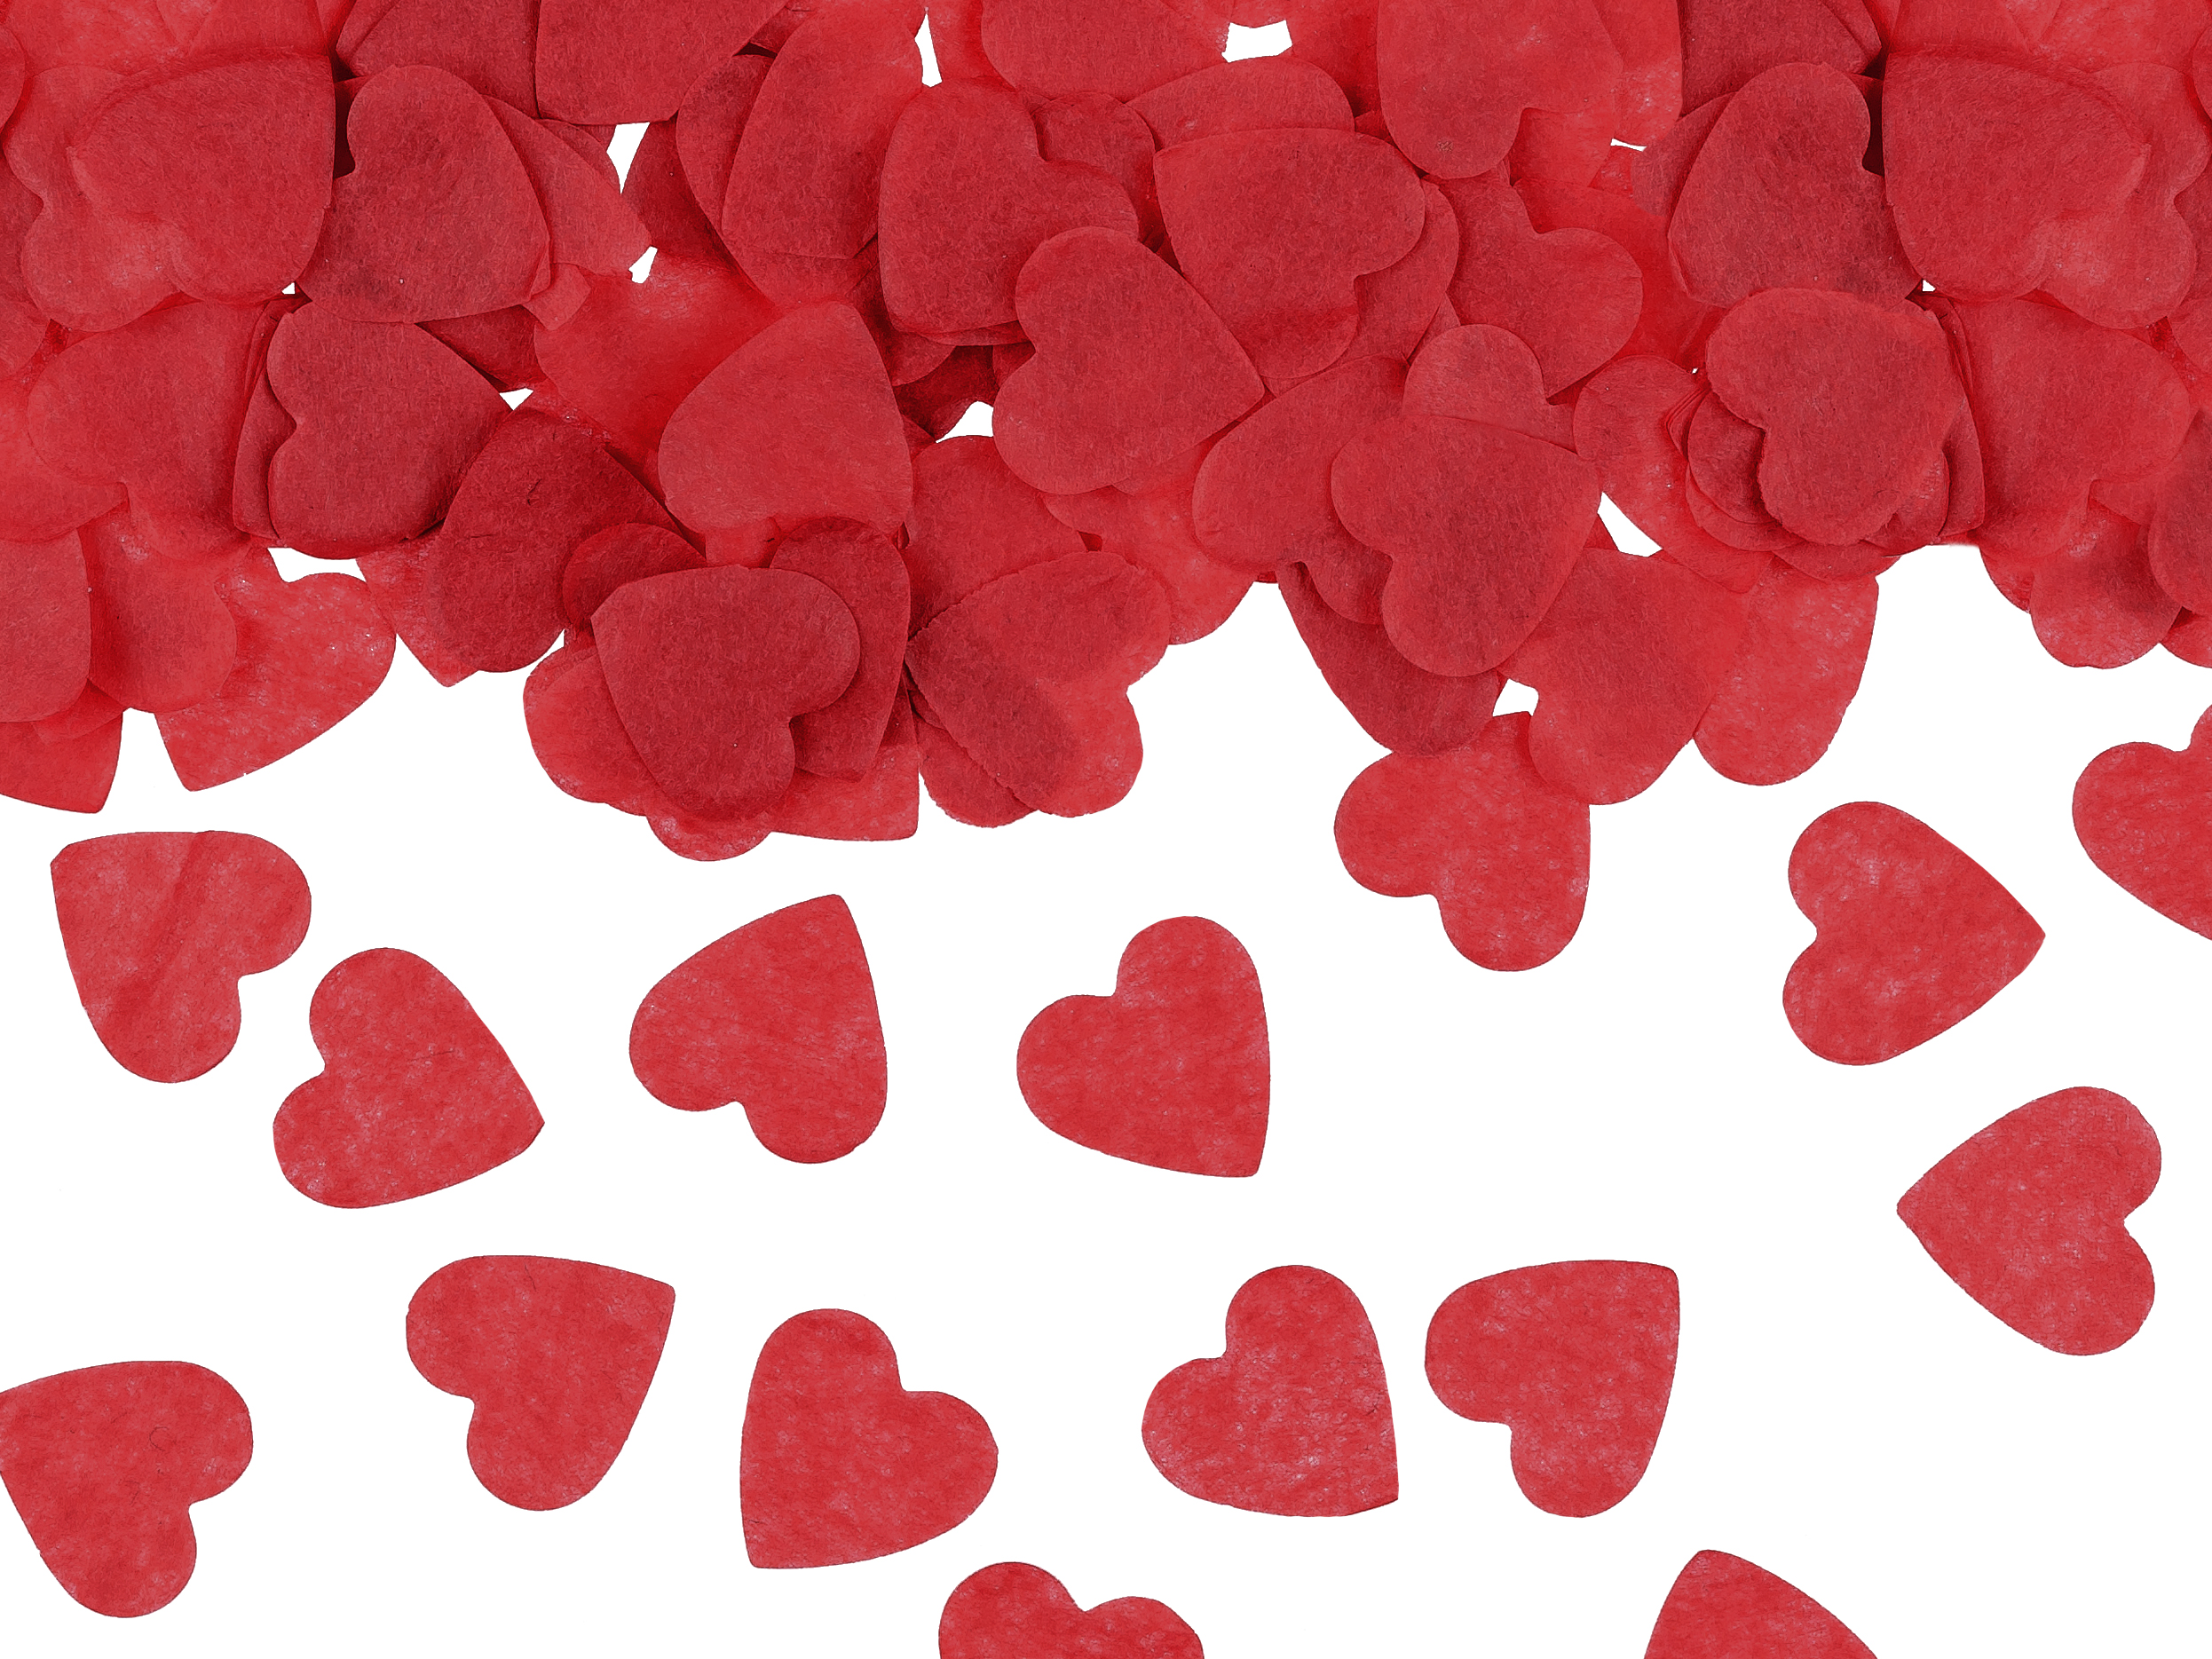  Confetti Hearts, 1,6x1,6 cm, red Größe: 1,6x1,6 cm 15g . rot